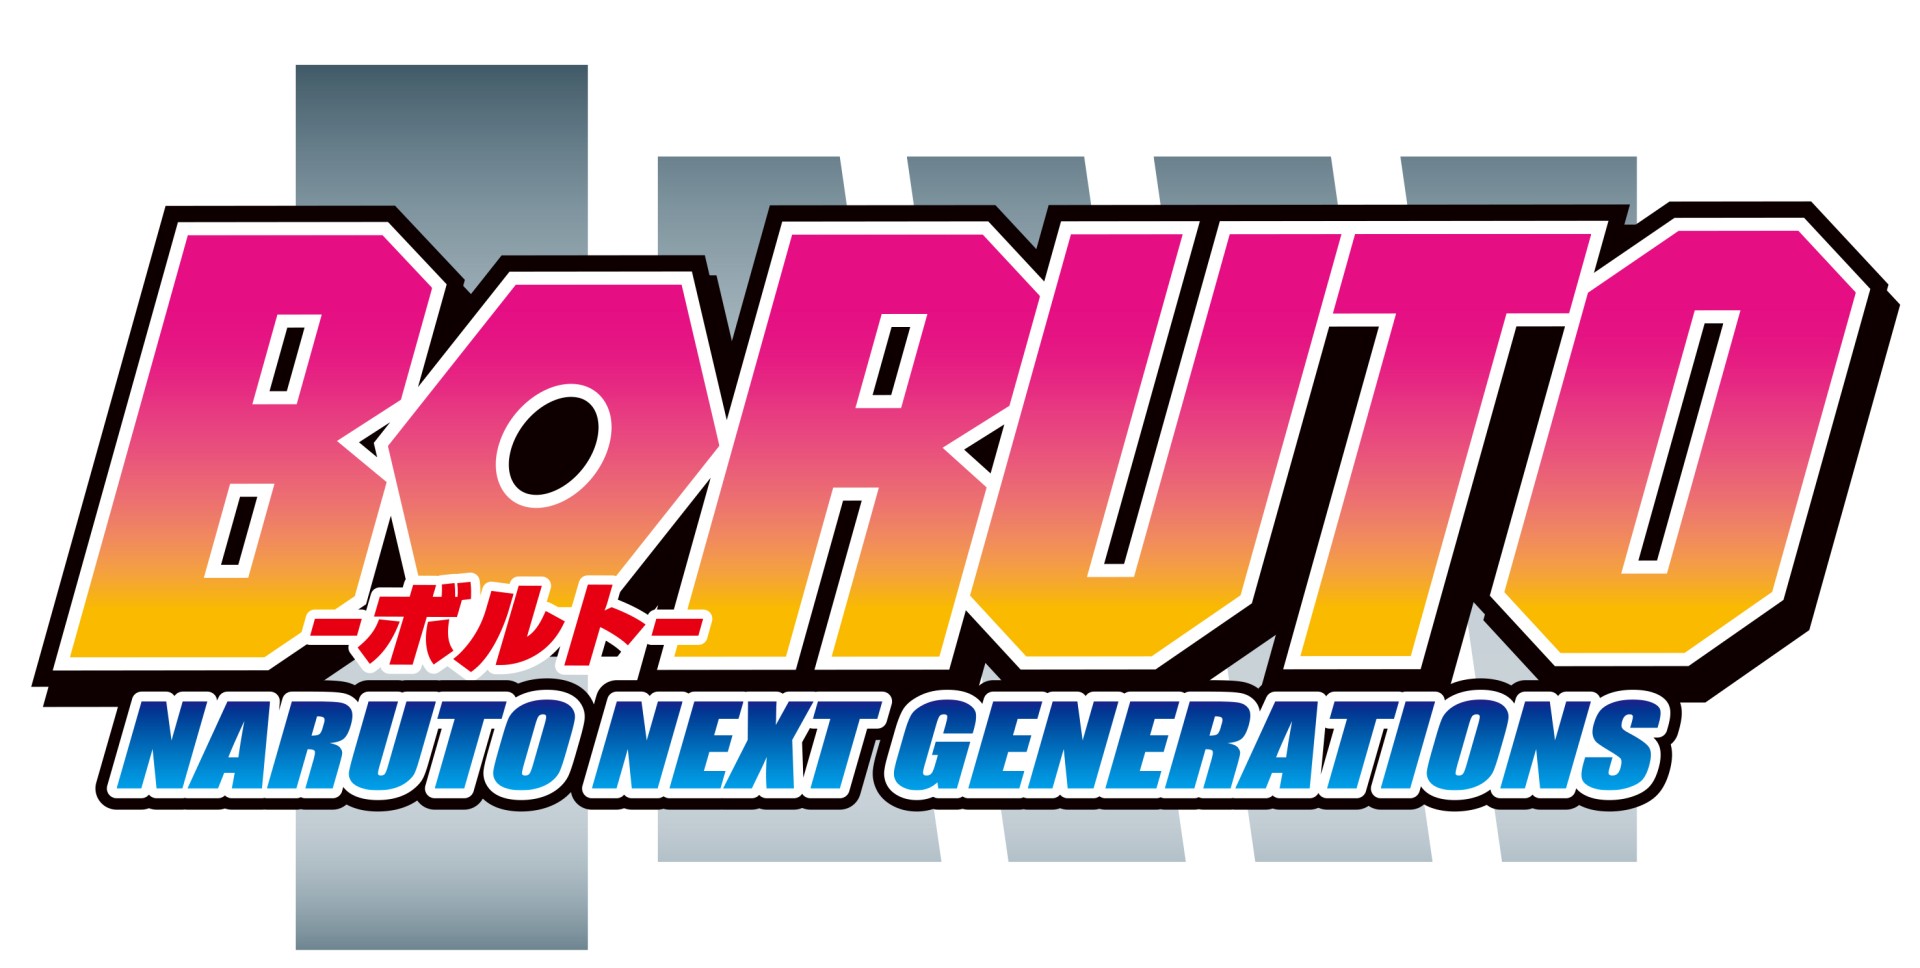 Boruto: Naruto Next Generations (TV Series 2017– ) - Episode list